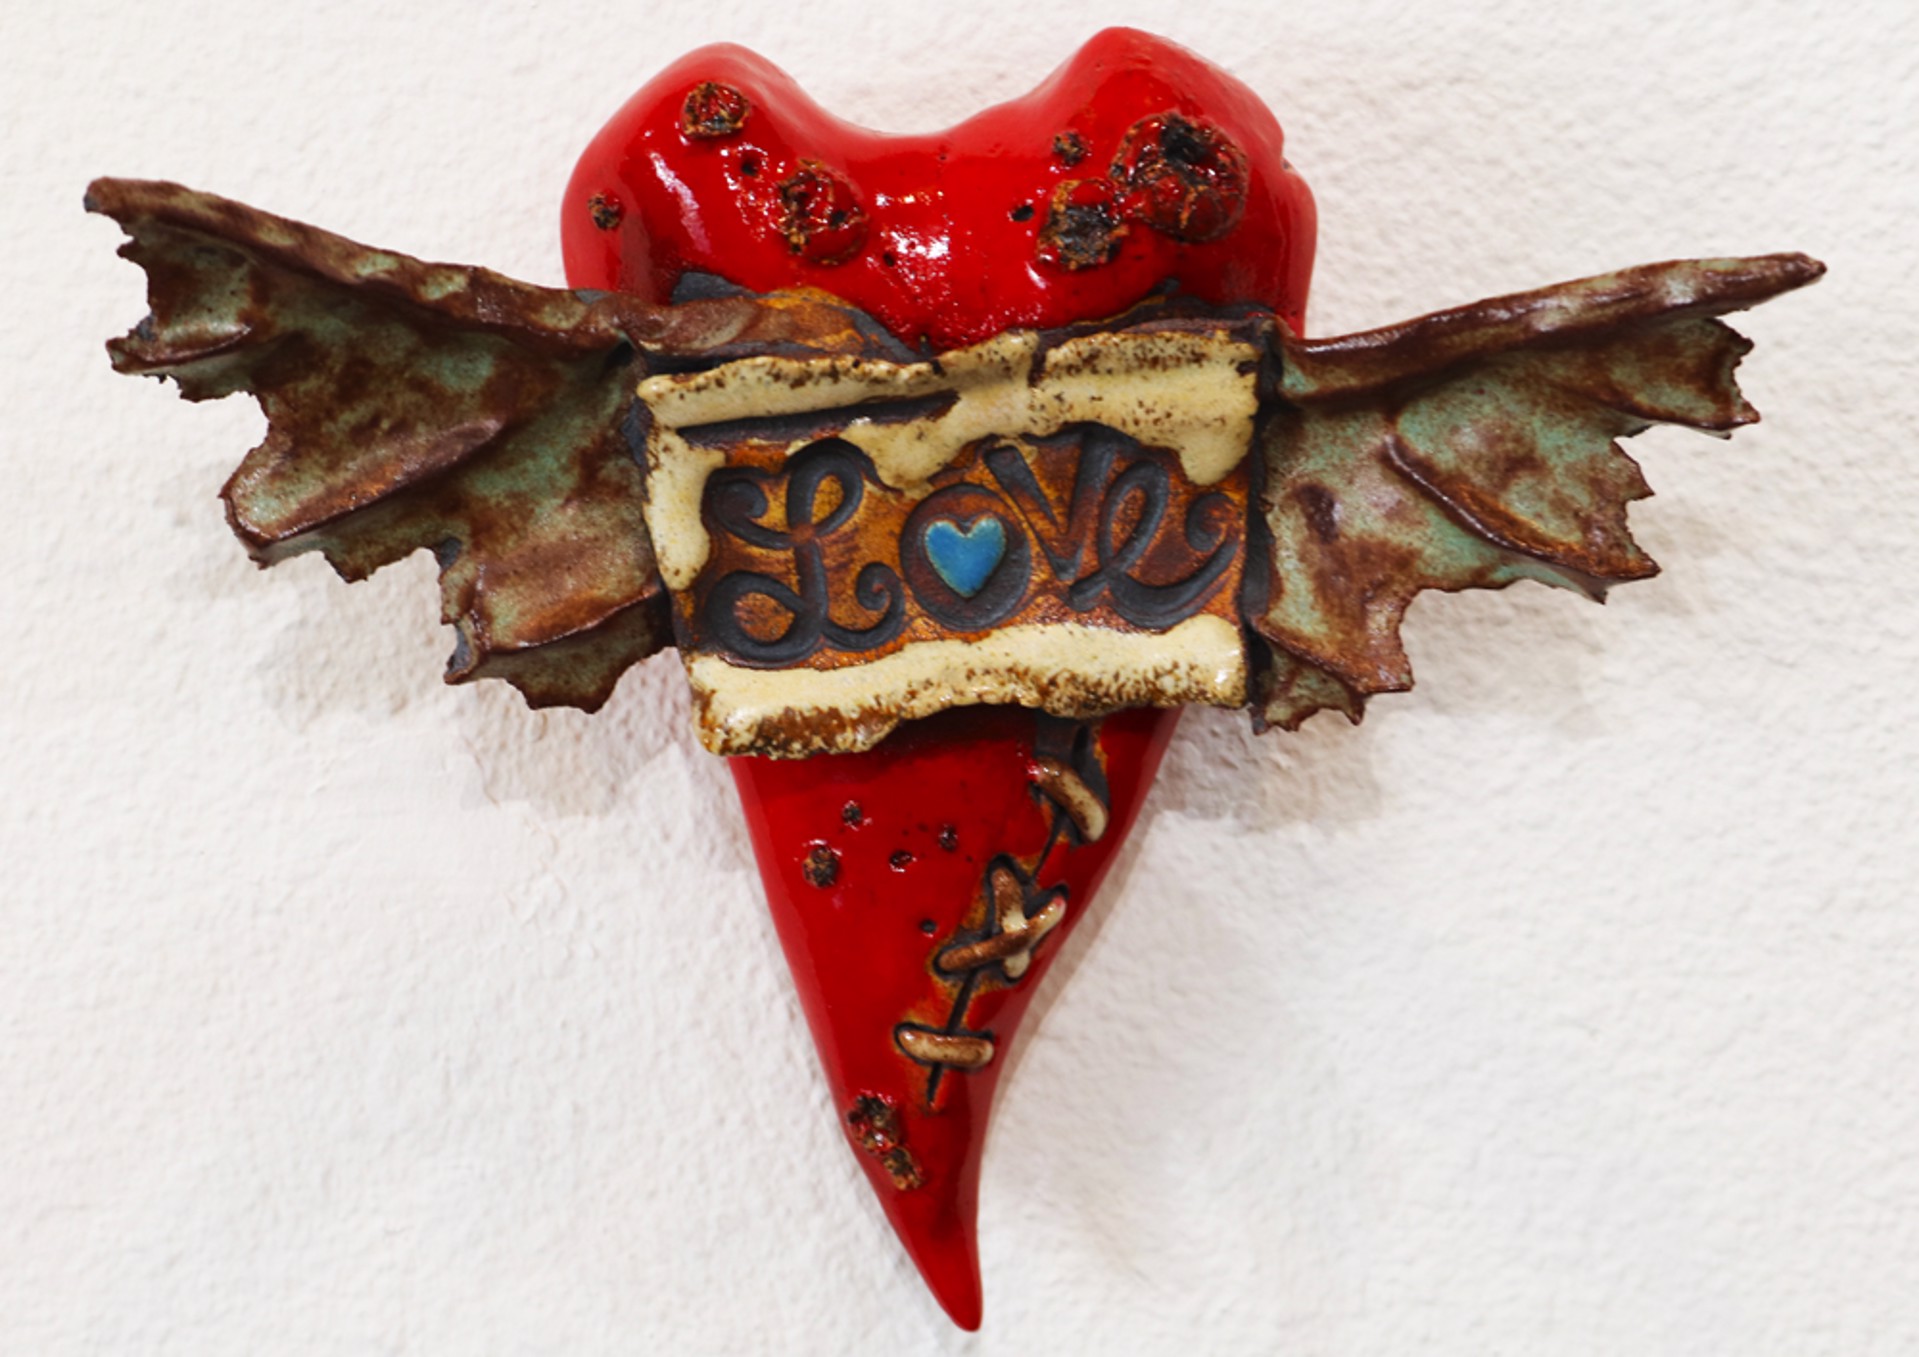 "Love" Wall Heart by Bryan Tubbs